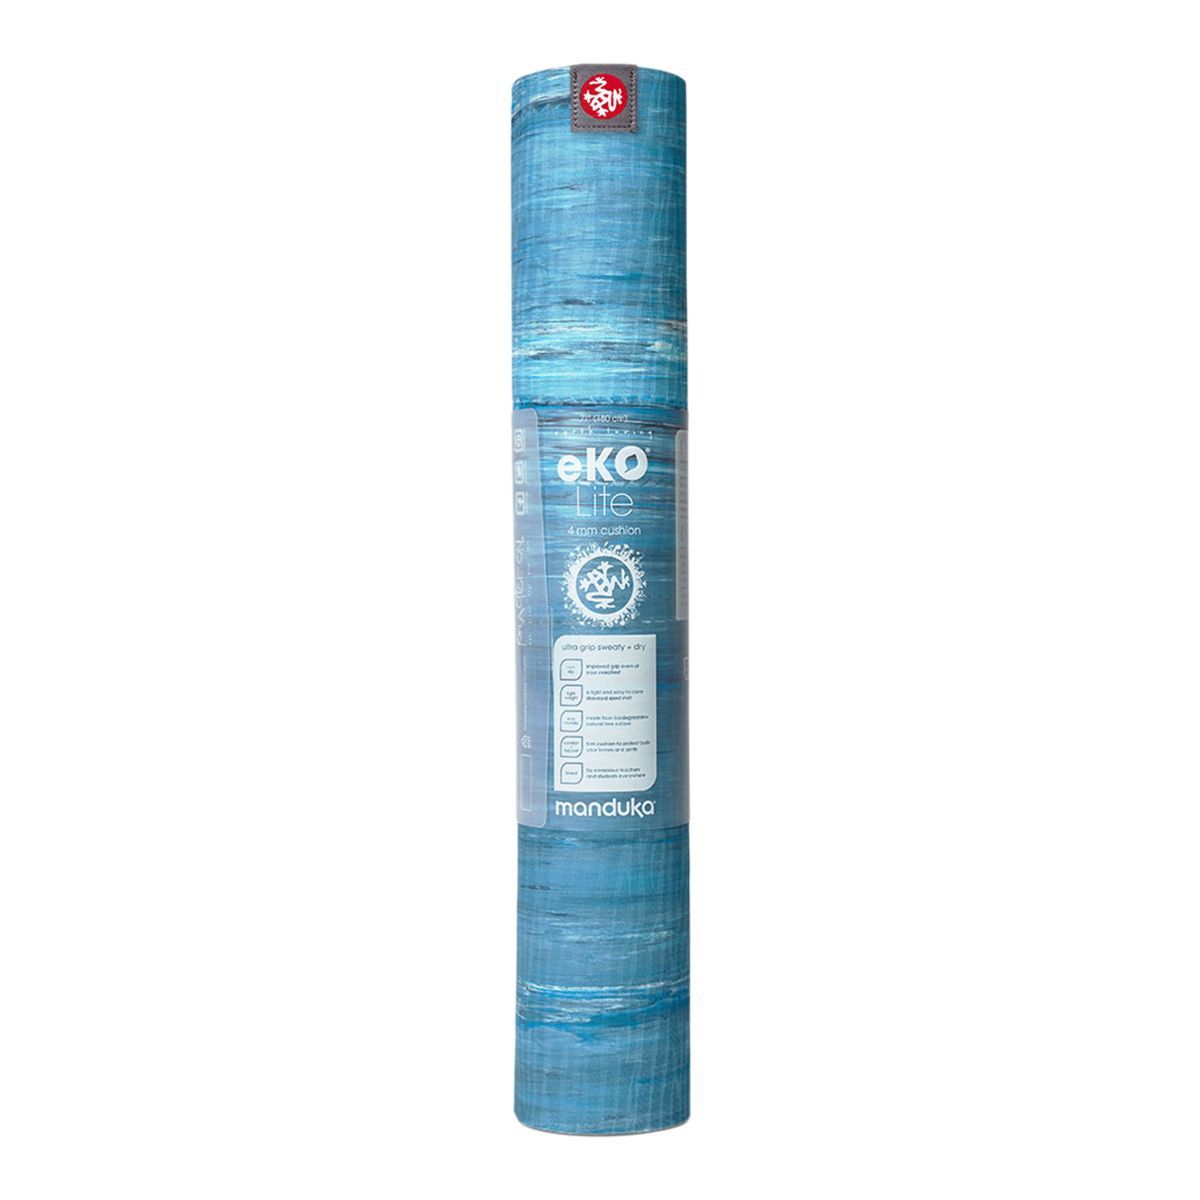 Manduka eKO Lite Yoga Mat, 4mm, Natural Rubber